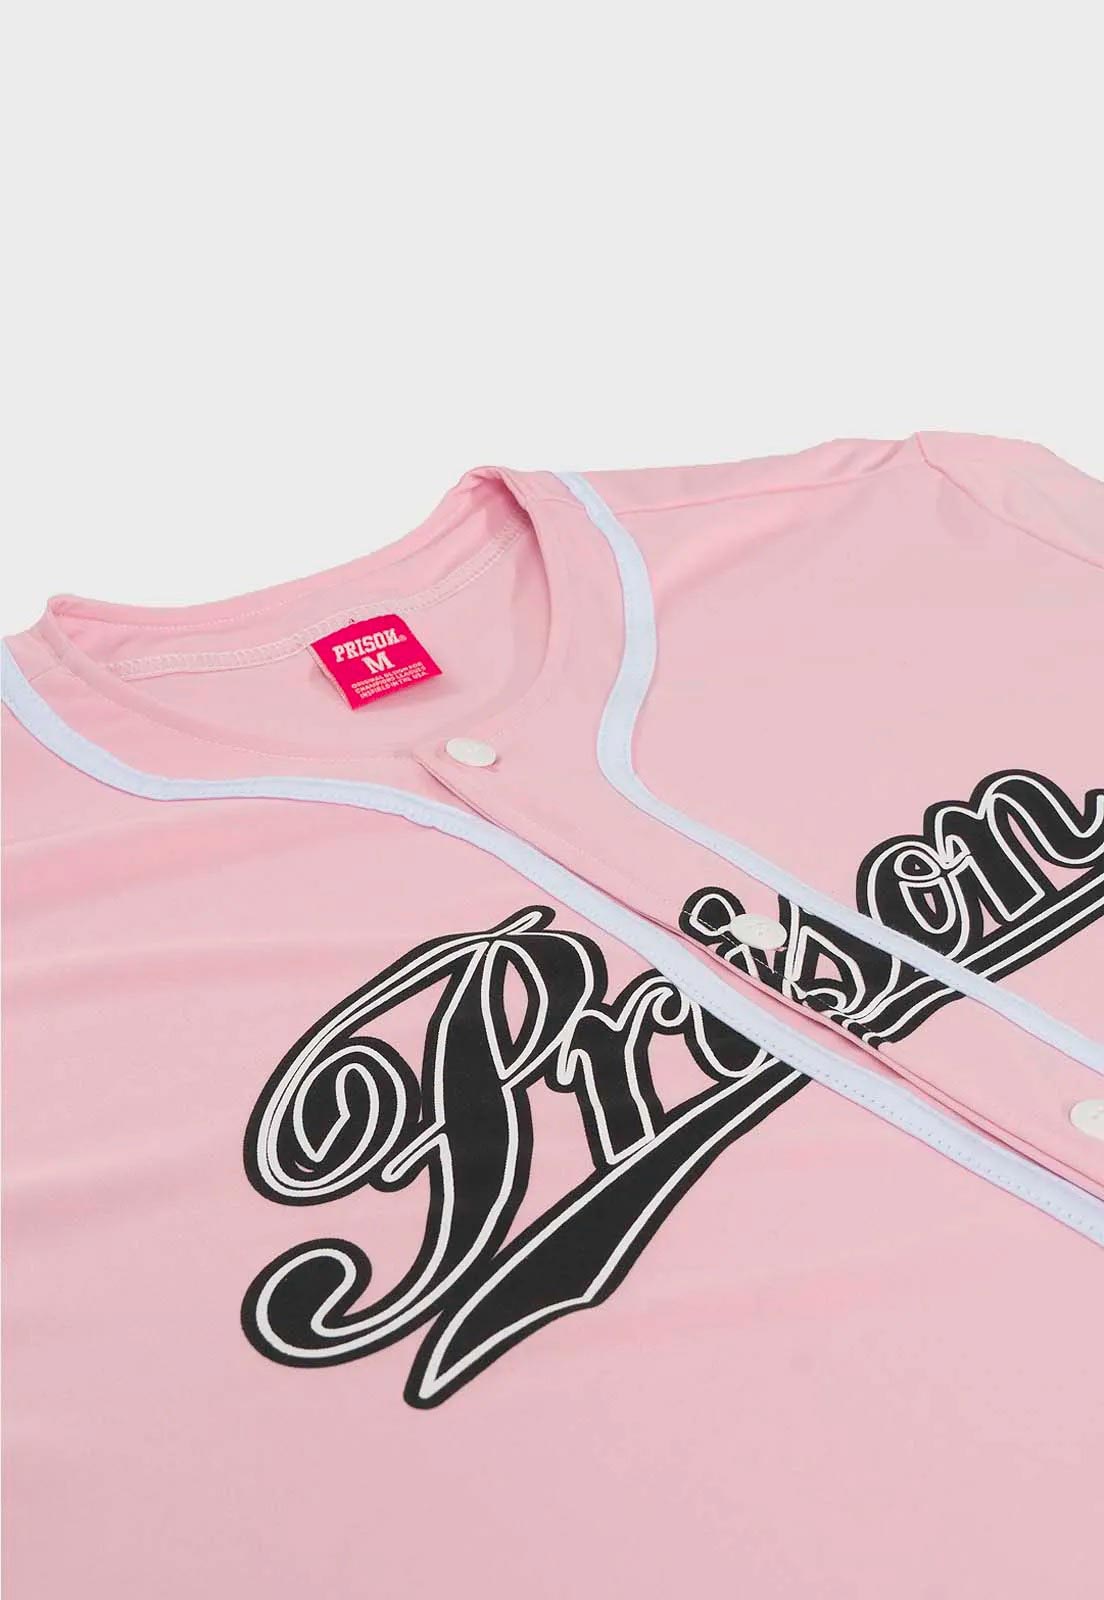 Camisa de Baseball League Prison Yorks pink